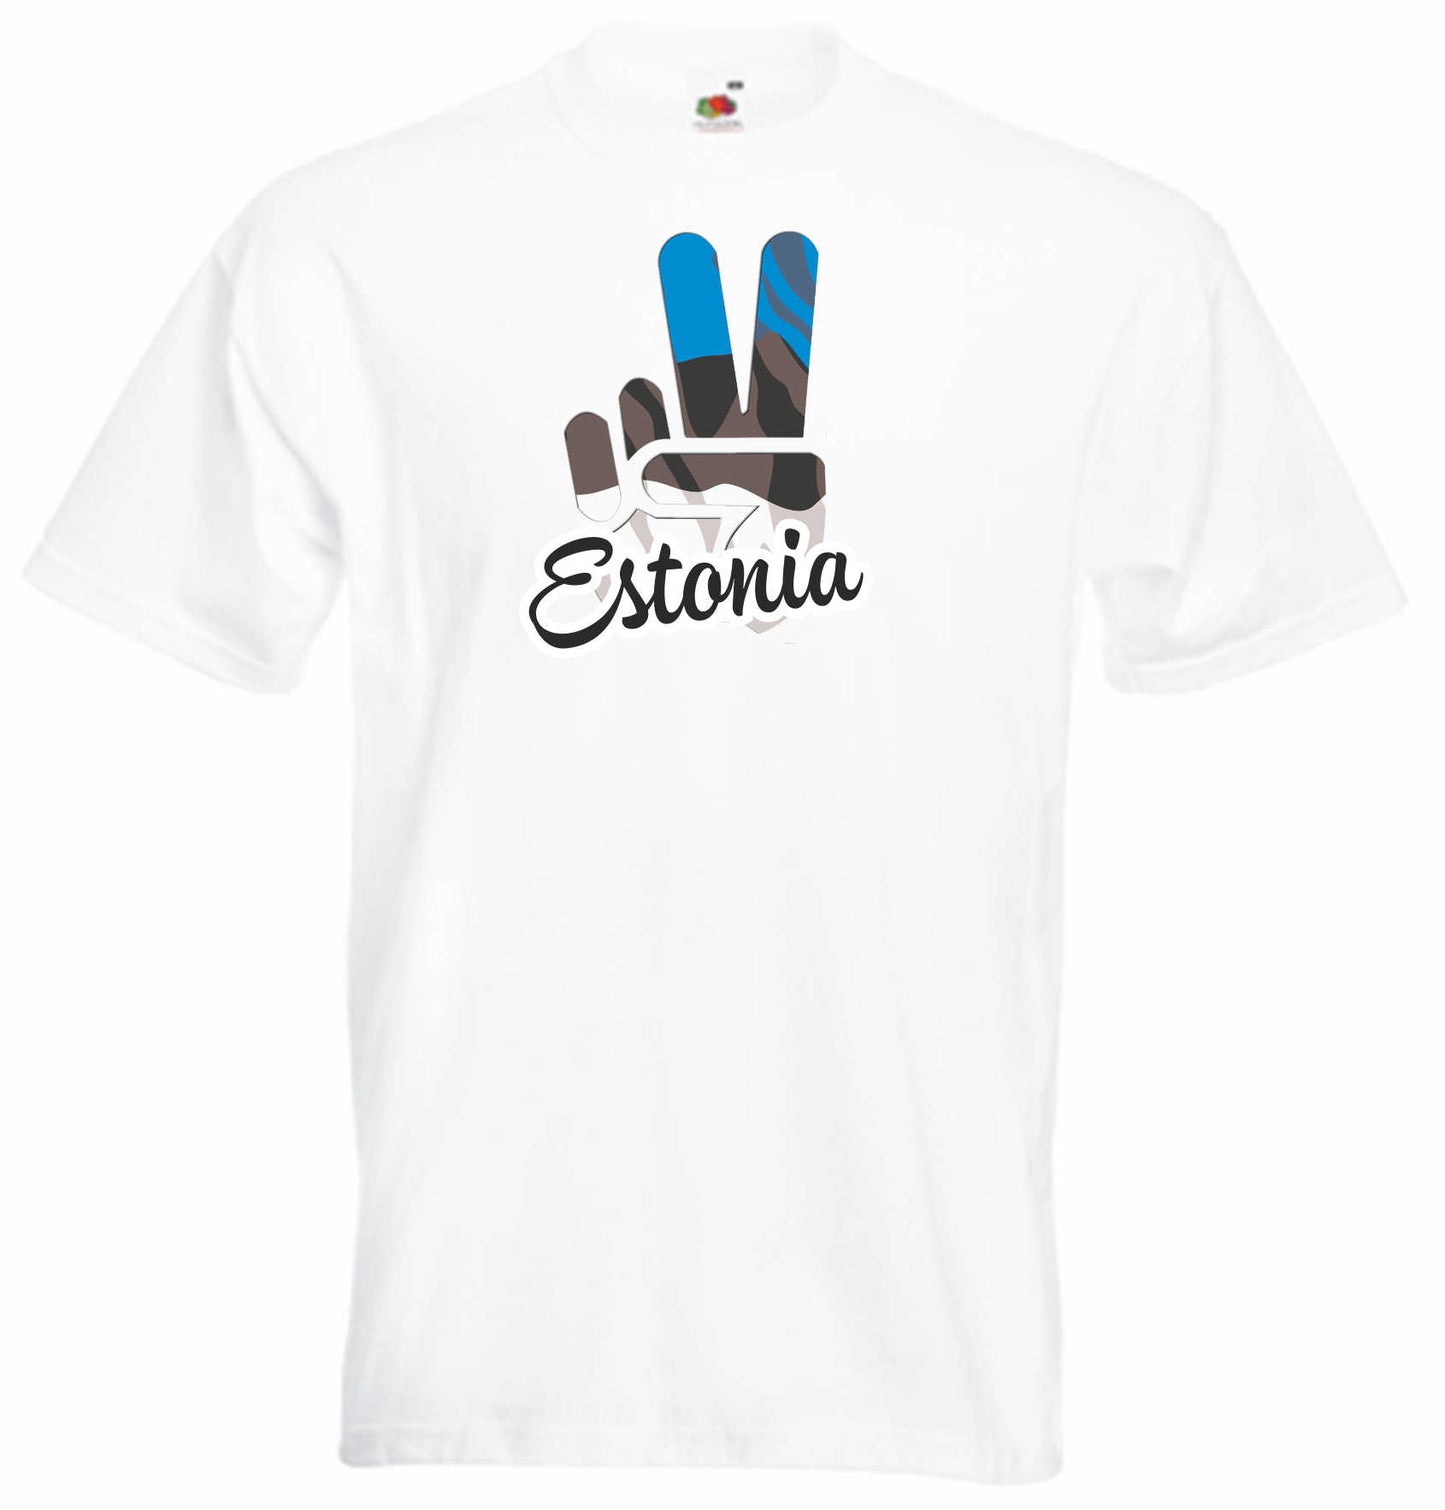 T-Shirt Herren - Victory - Flagge / Fahne - Estonia - Sieg